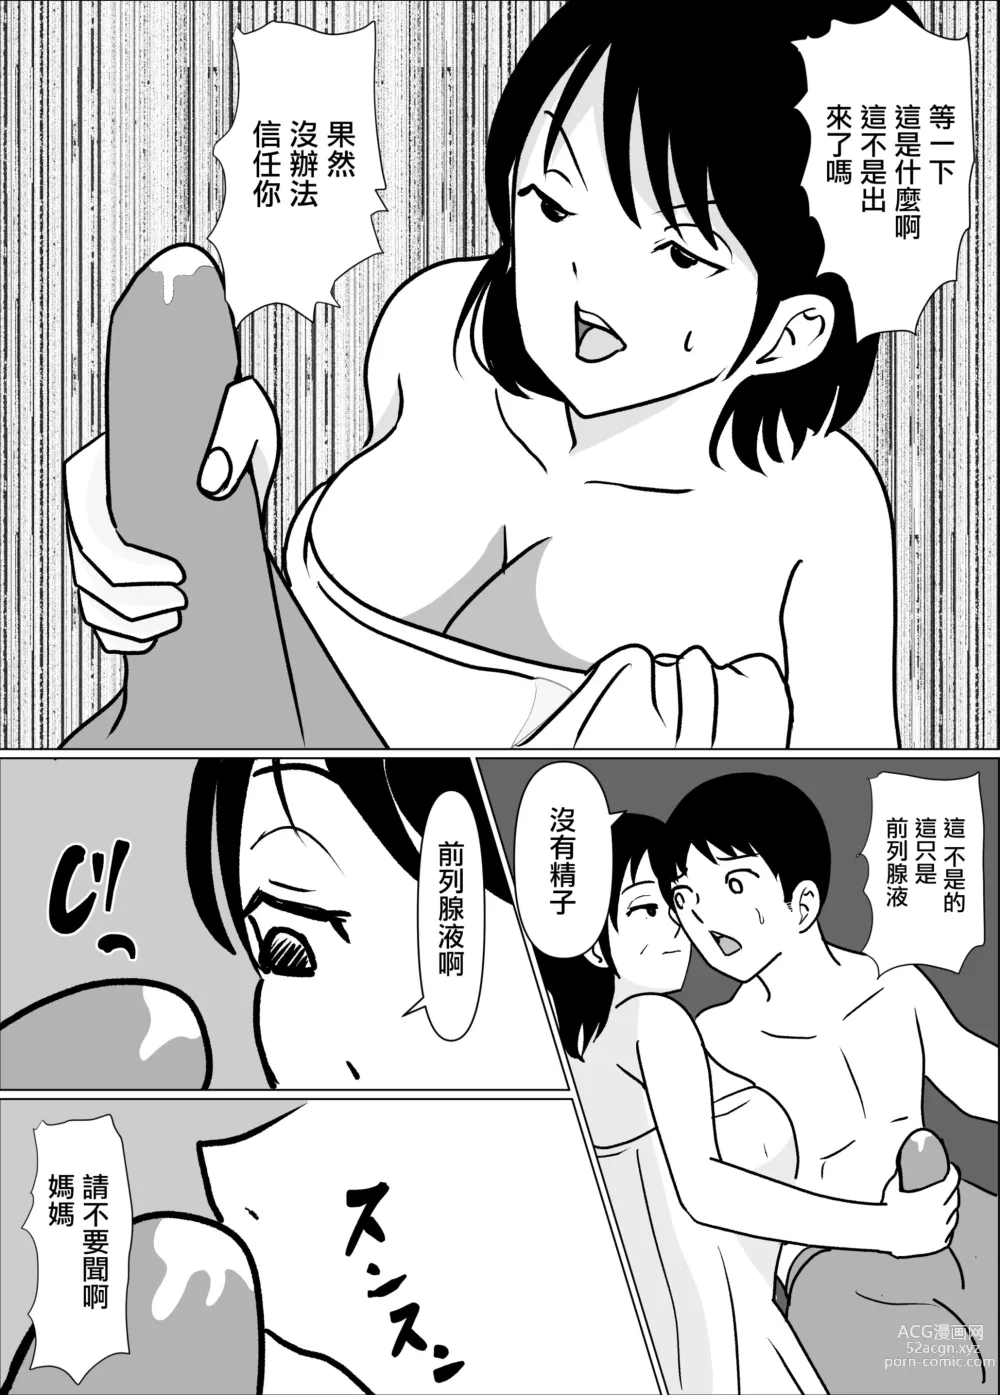 Page 8 of doujinshi 為了在妻子的排卵日授精而攢的精子被丈母娘看上了